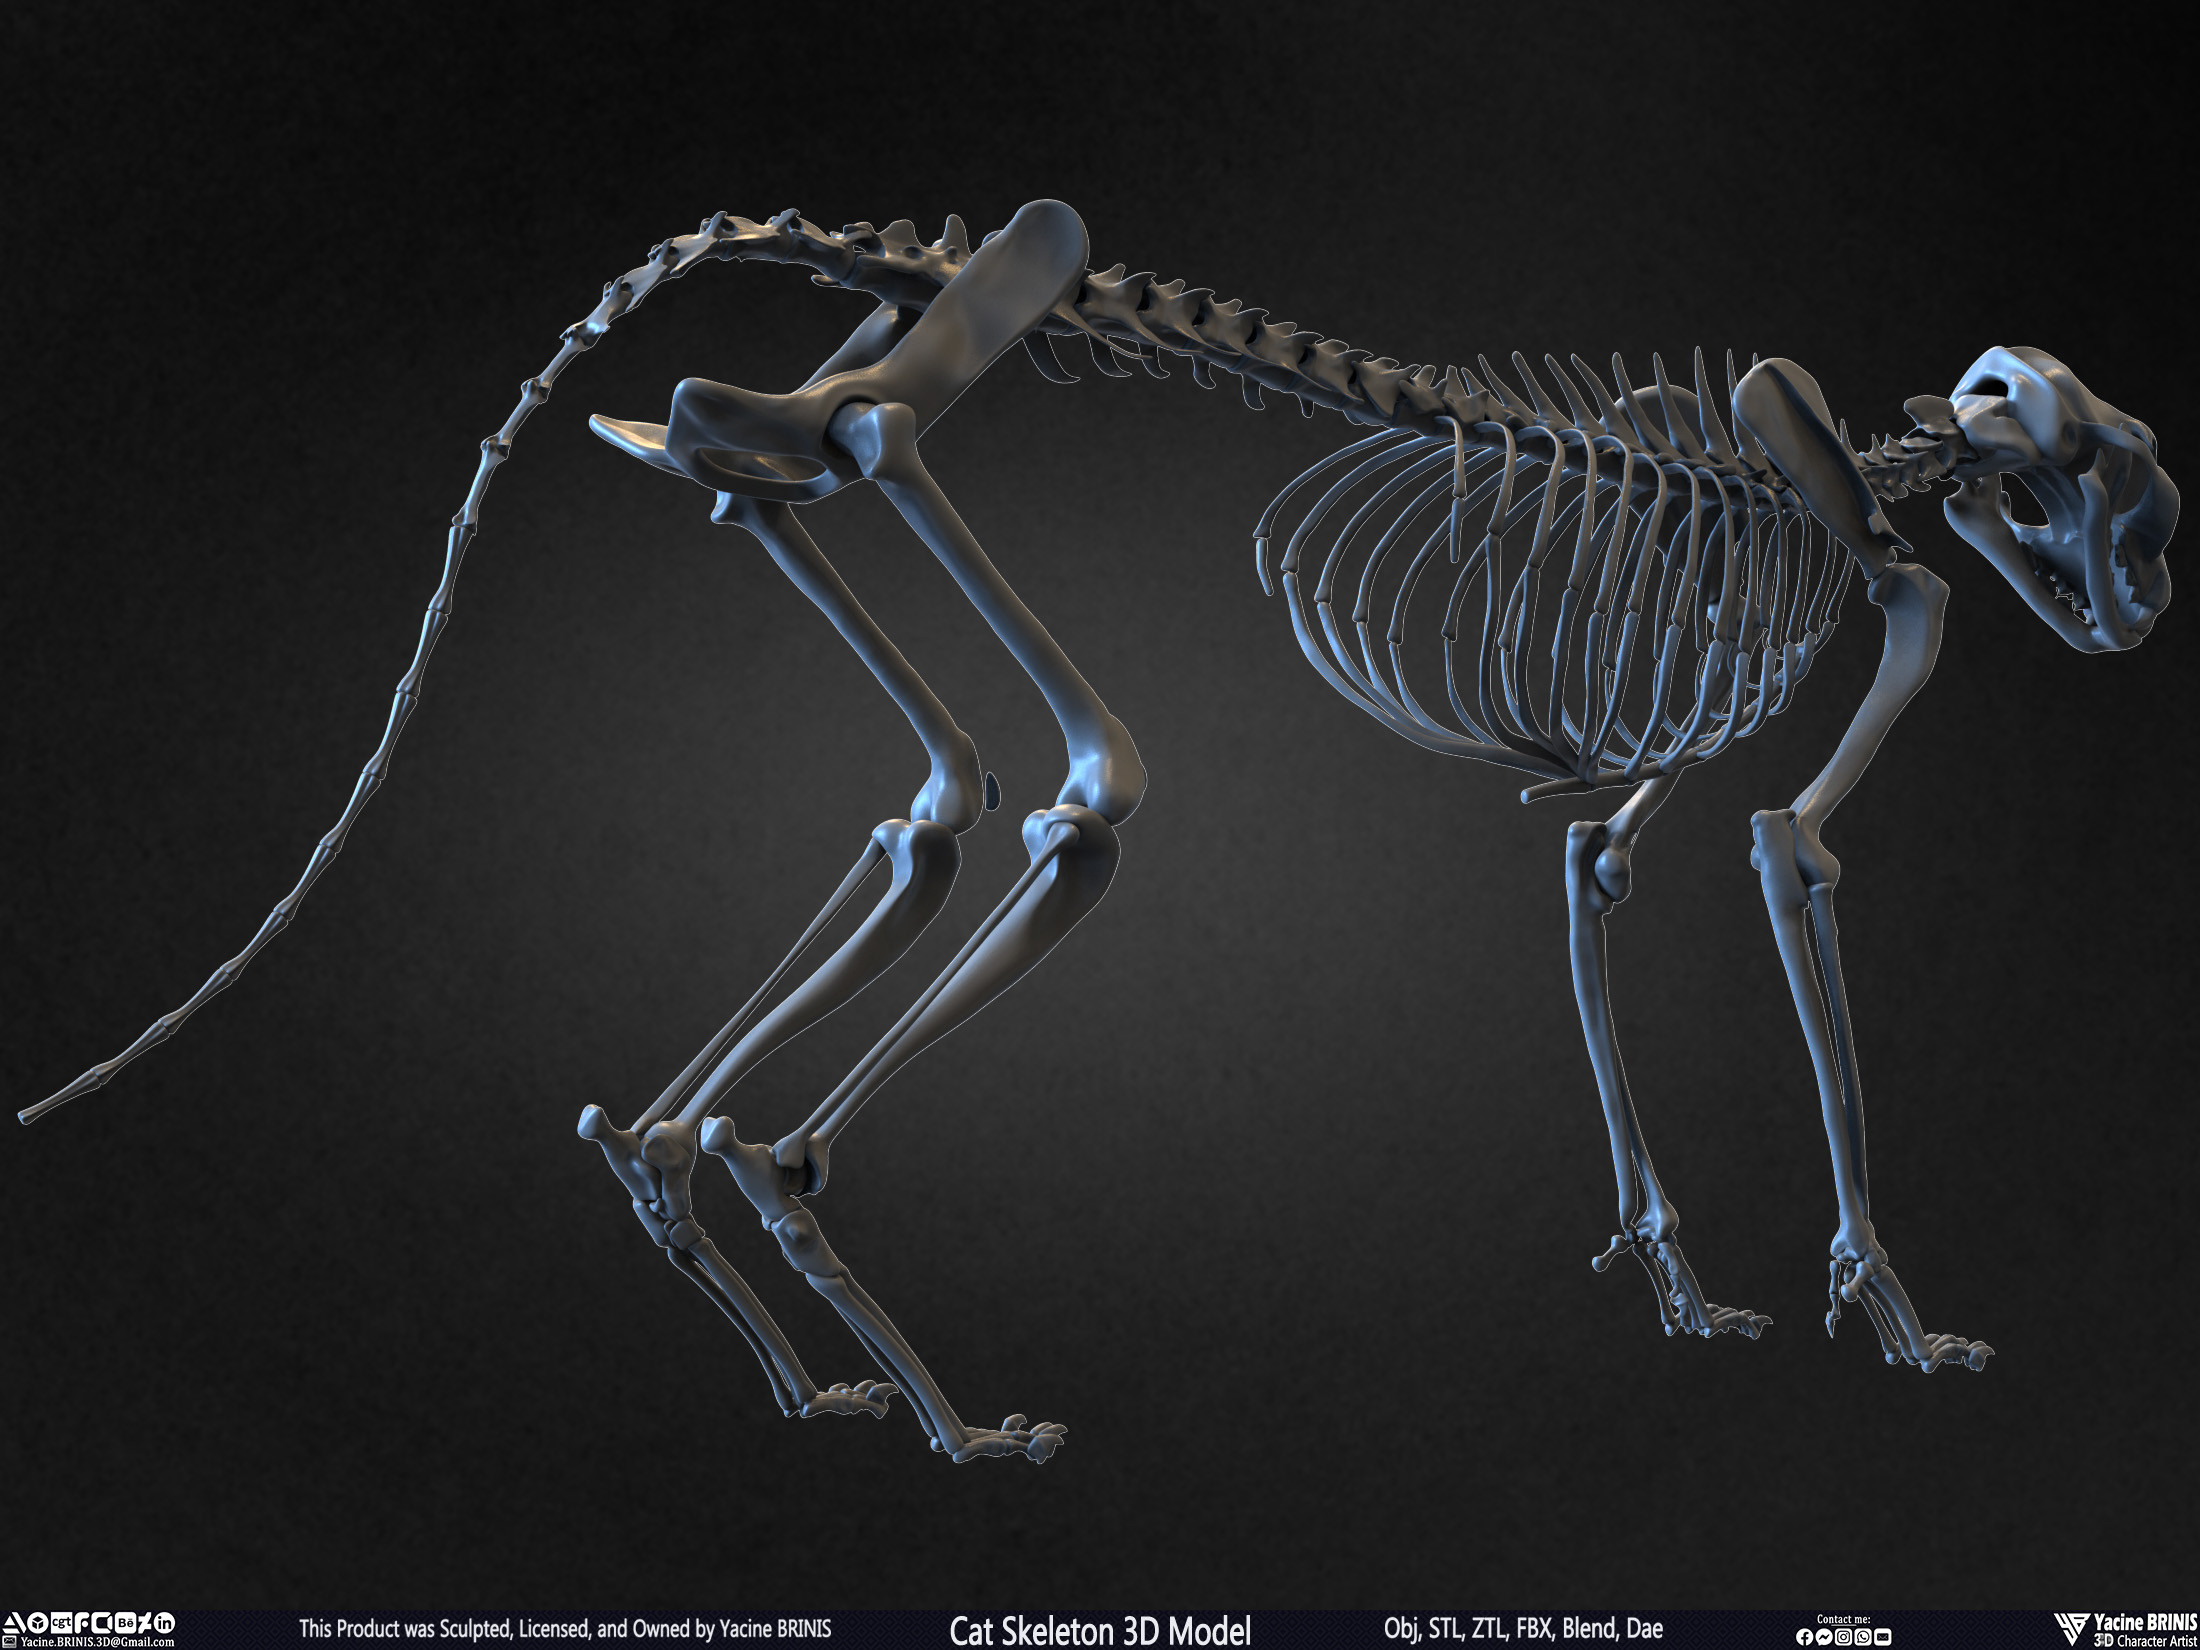 Highly Detailed Cat Skeleton 3D Model Sculpted by Yacine BRINIS Set 022